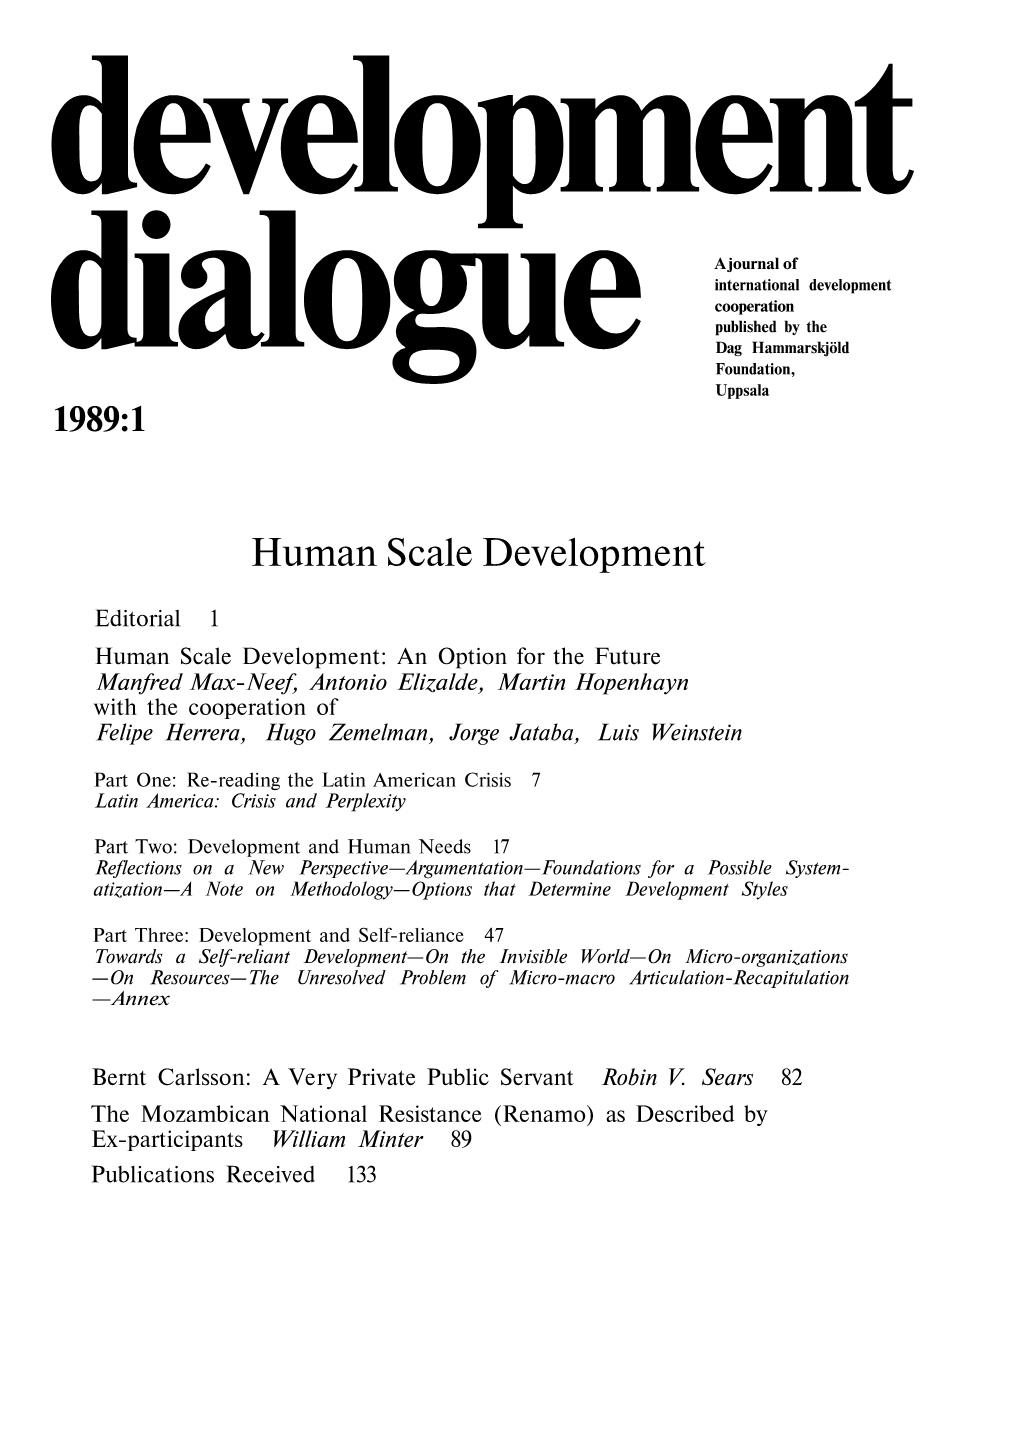 Human Scale Development